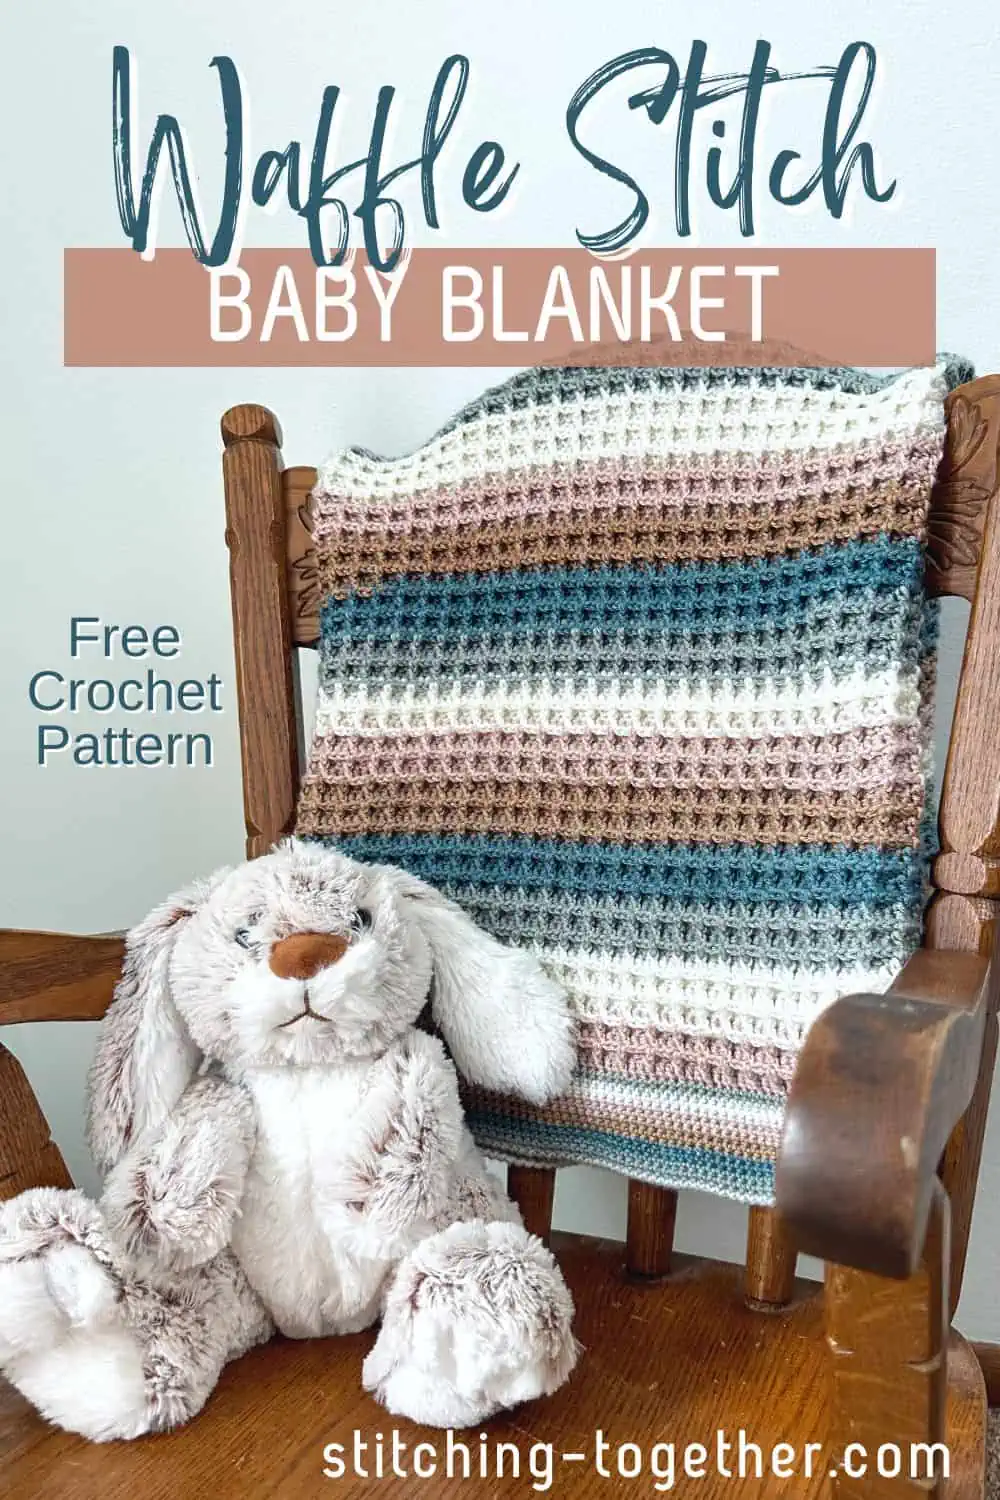 a stuffed bunny and a striped crochet waffle stitch baby blanket draped on a small rocking chair with text overlay reading "waffle stitch baby blanket free pattern"